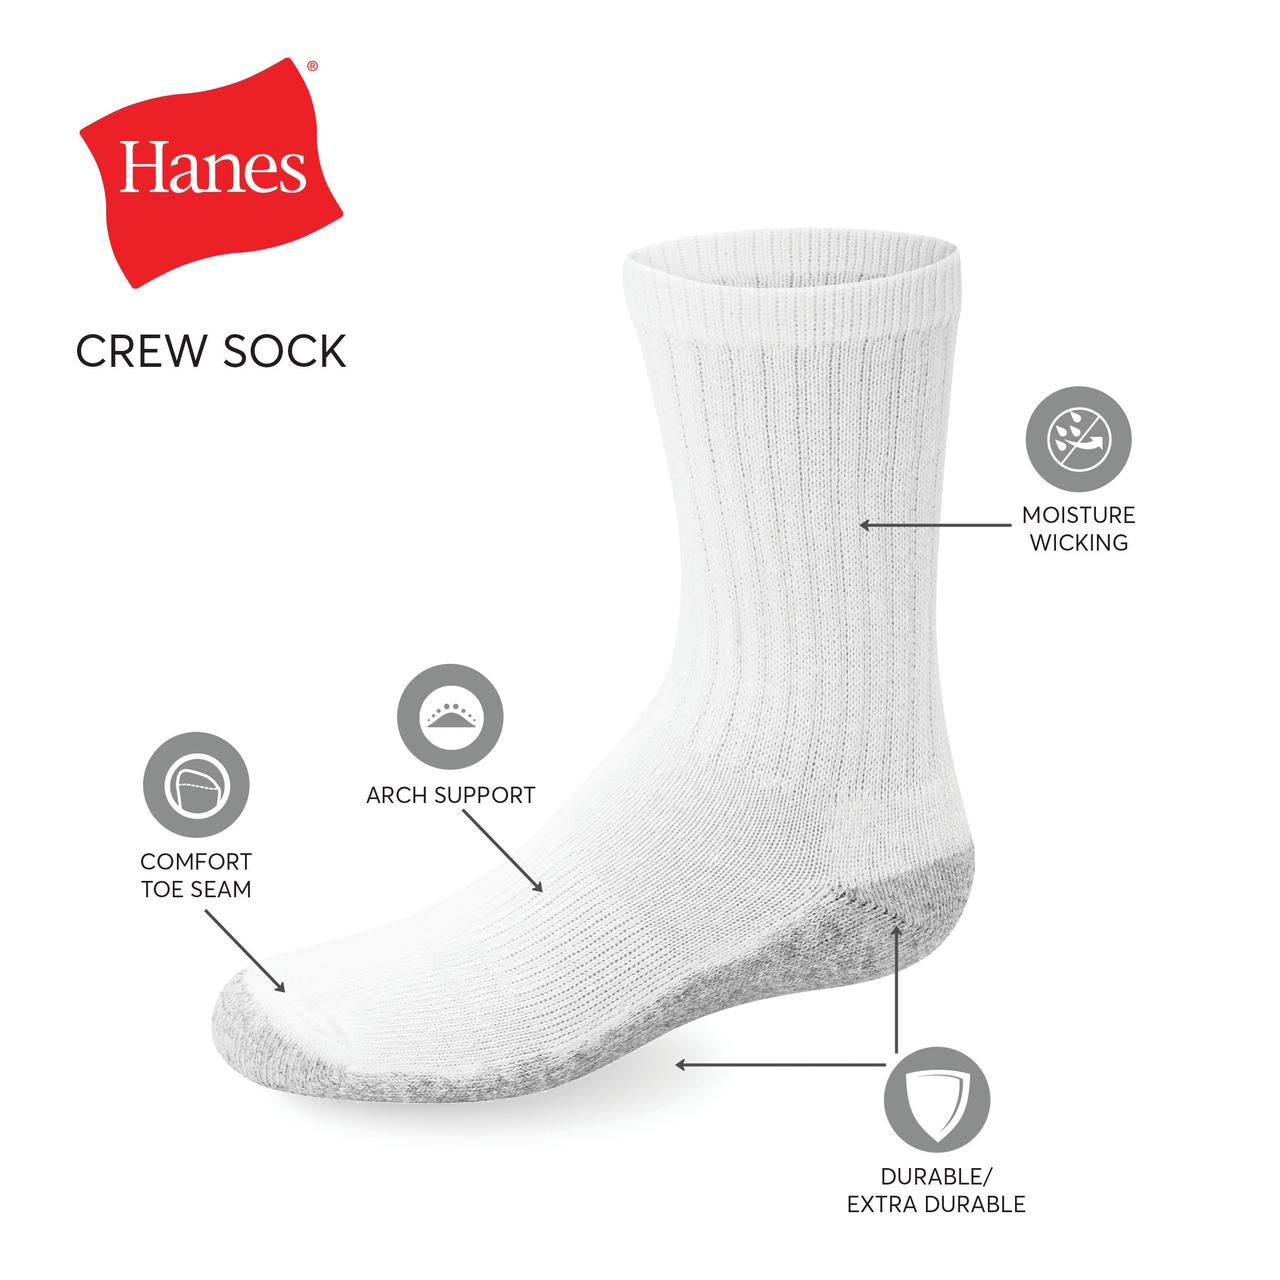 Hanes Boys' Crew Socks, 12 Pack - image 5 of 5